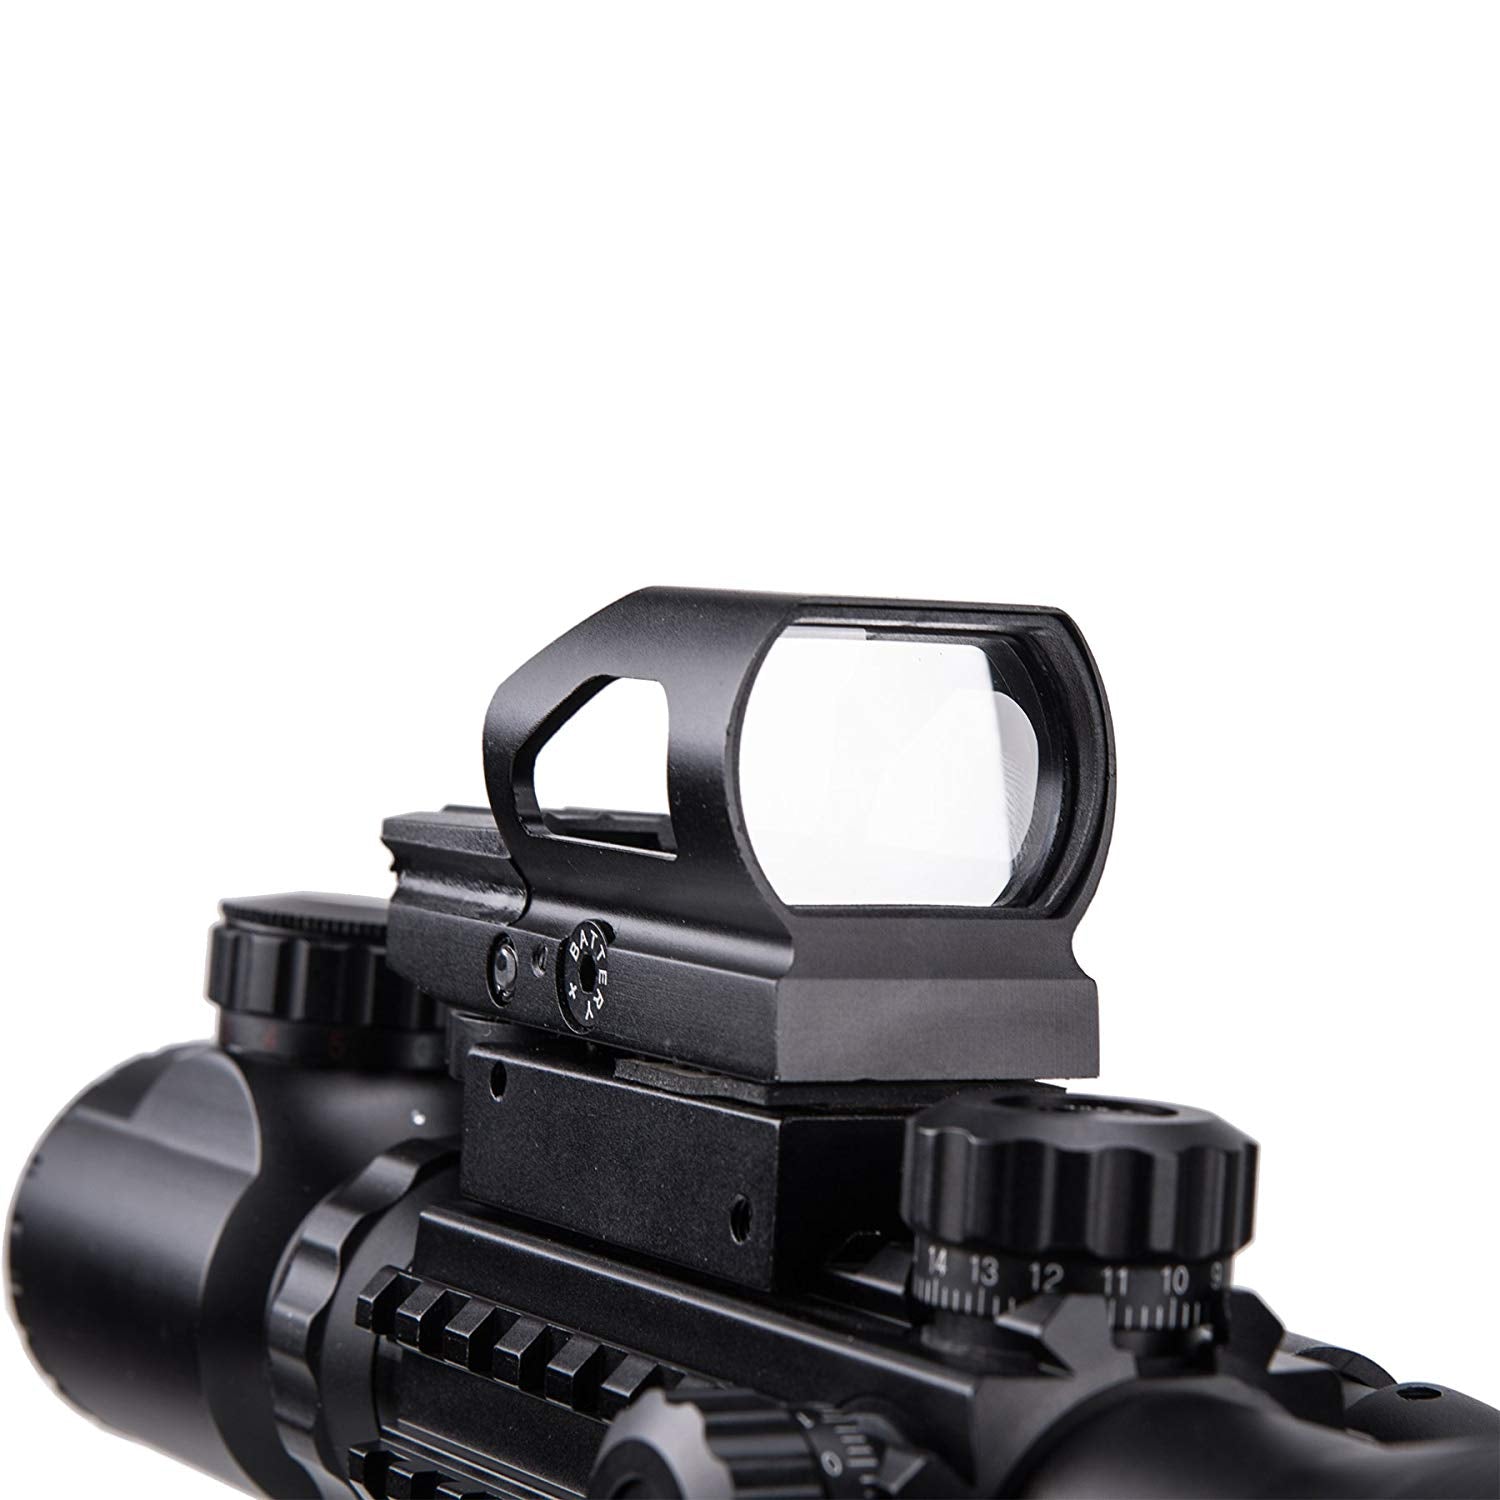 Pinty 4-in-1 Rifle Scope 4-16X50mm Optics/Green Laser/Holographic Dot Sight/14 Slot Riser